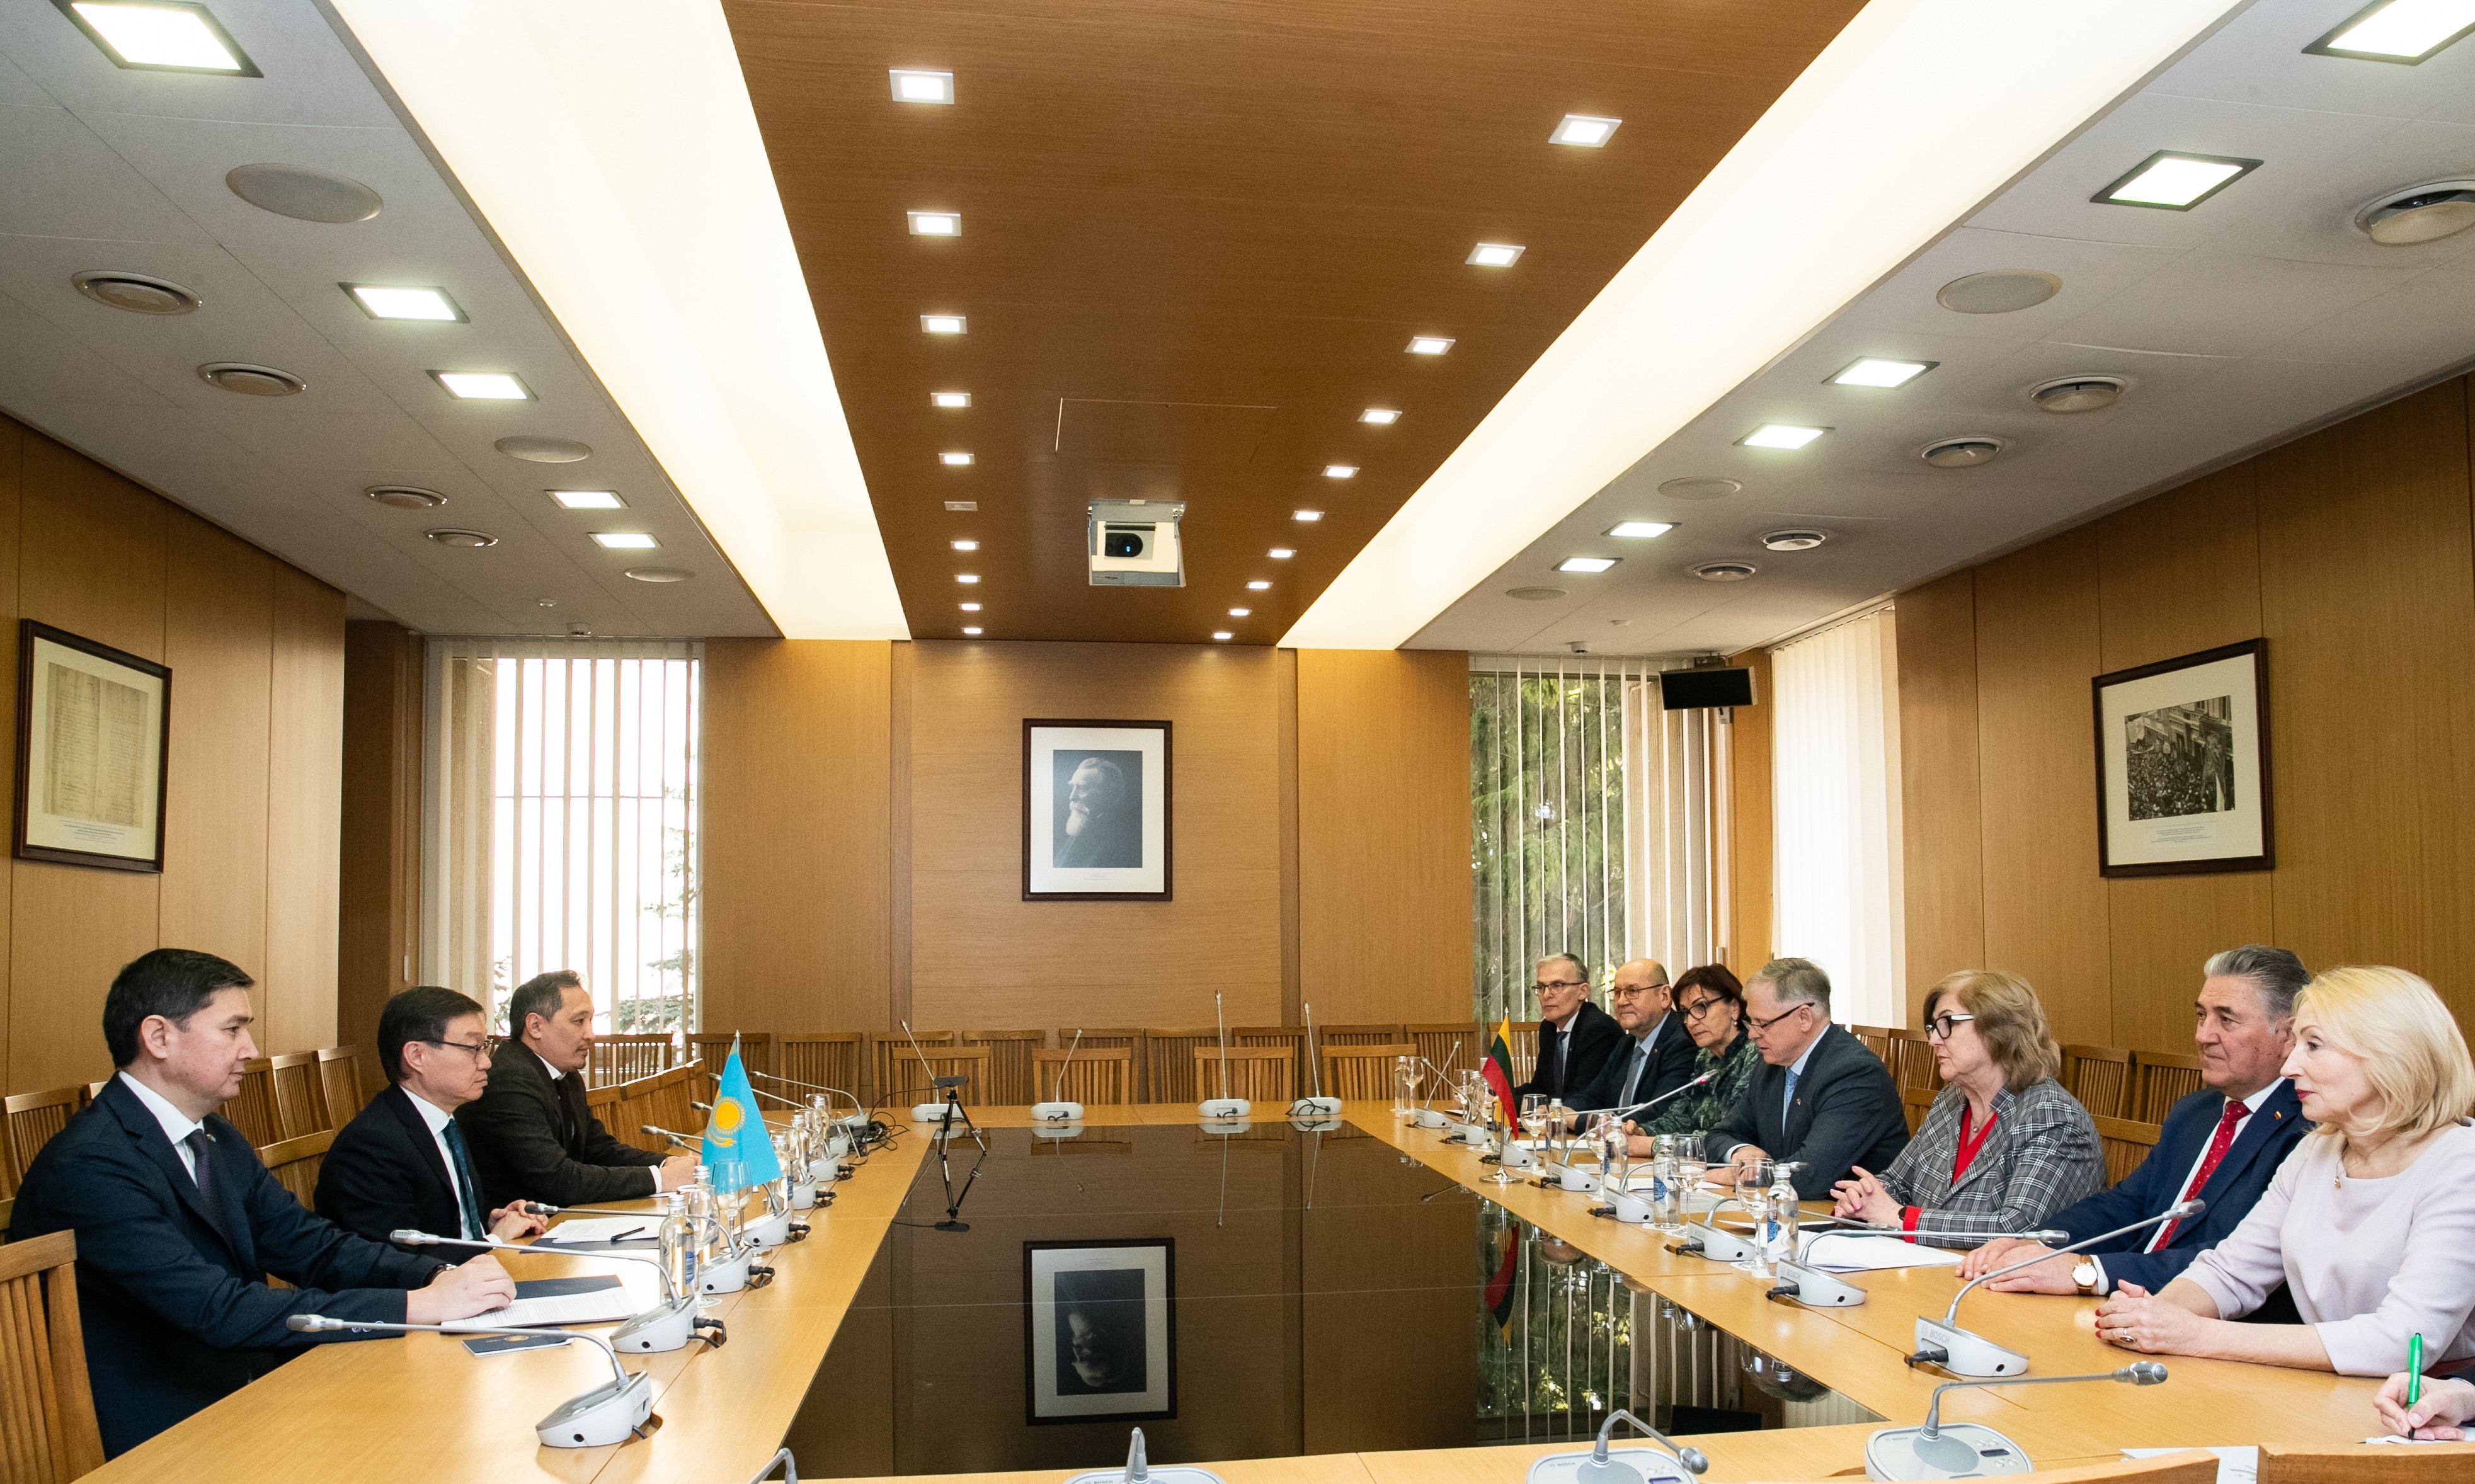 Lithuanian Parliamentarians are Interested in Kazakhstan’s Socio-Economic Development Plans